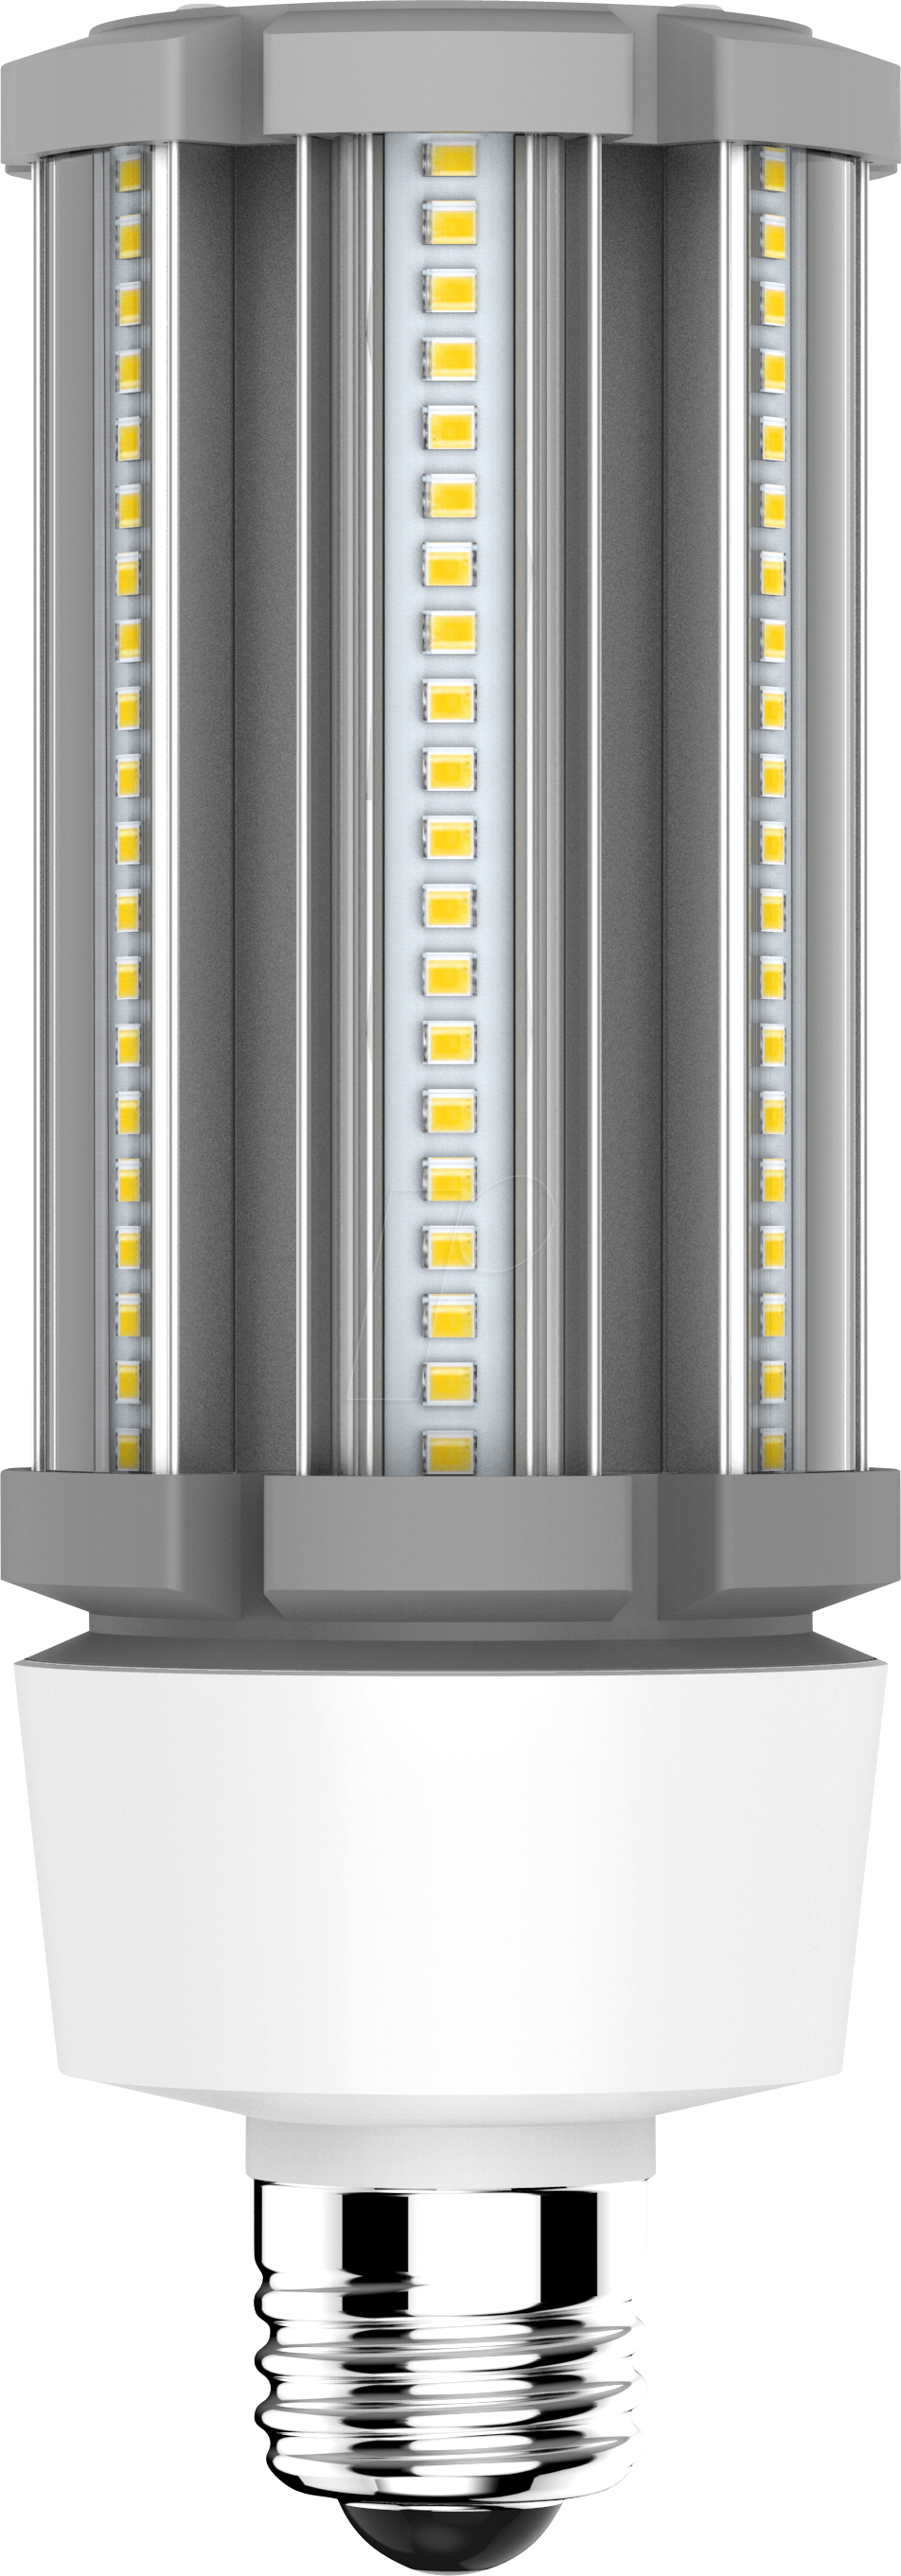 EURL P7069GUA009 - LED-Lampe E27, Cornbulb, 27 W, 3900 lm, 4000 K von EUROLIGHTING